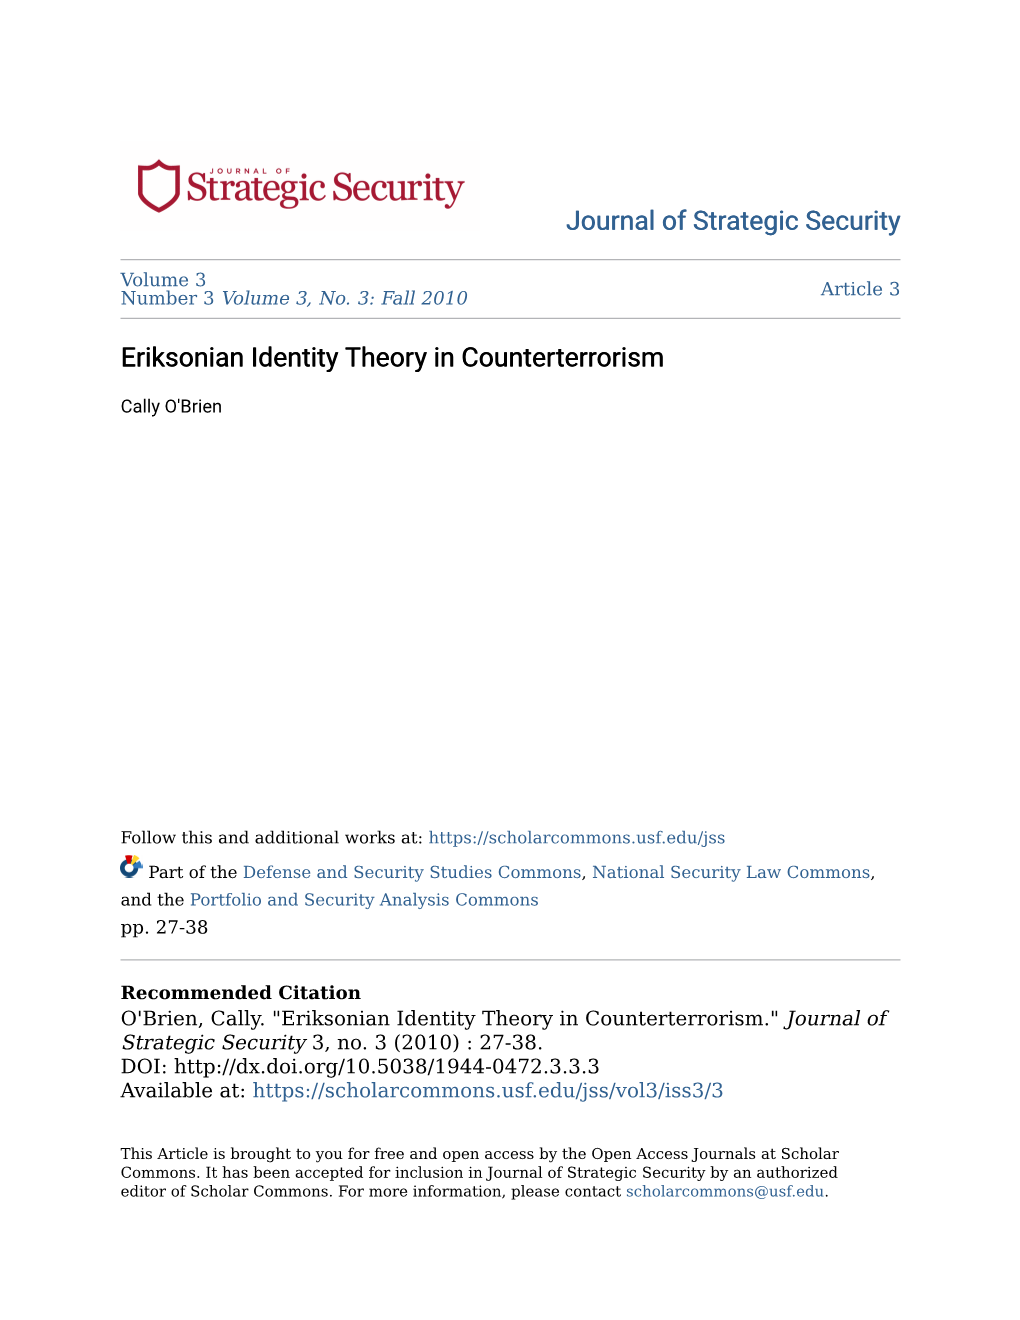 Eriksonian Identity Theory in Counterterrorism